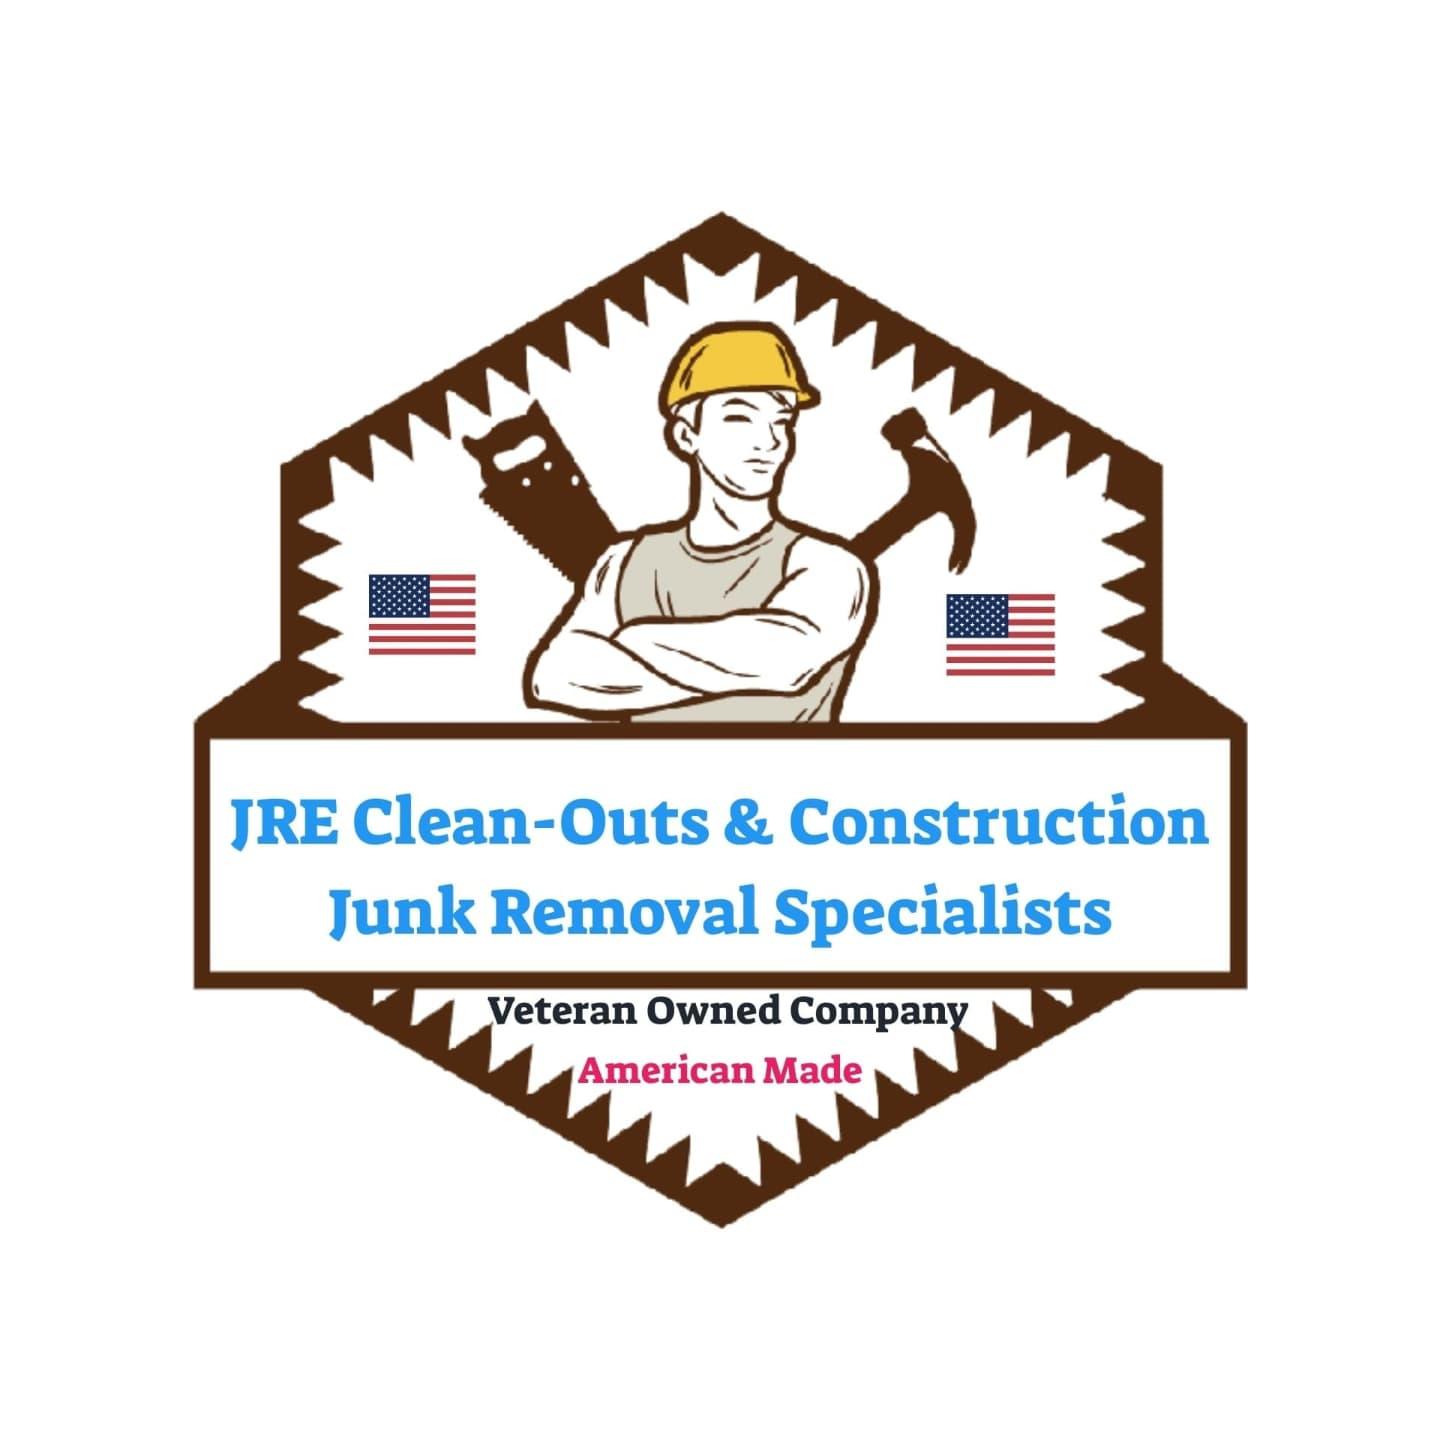 JRE Clean-Outs & Construction